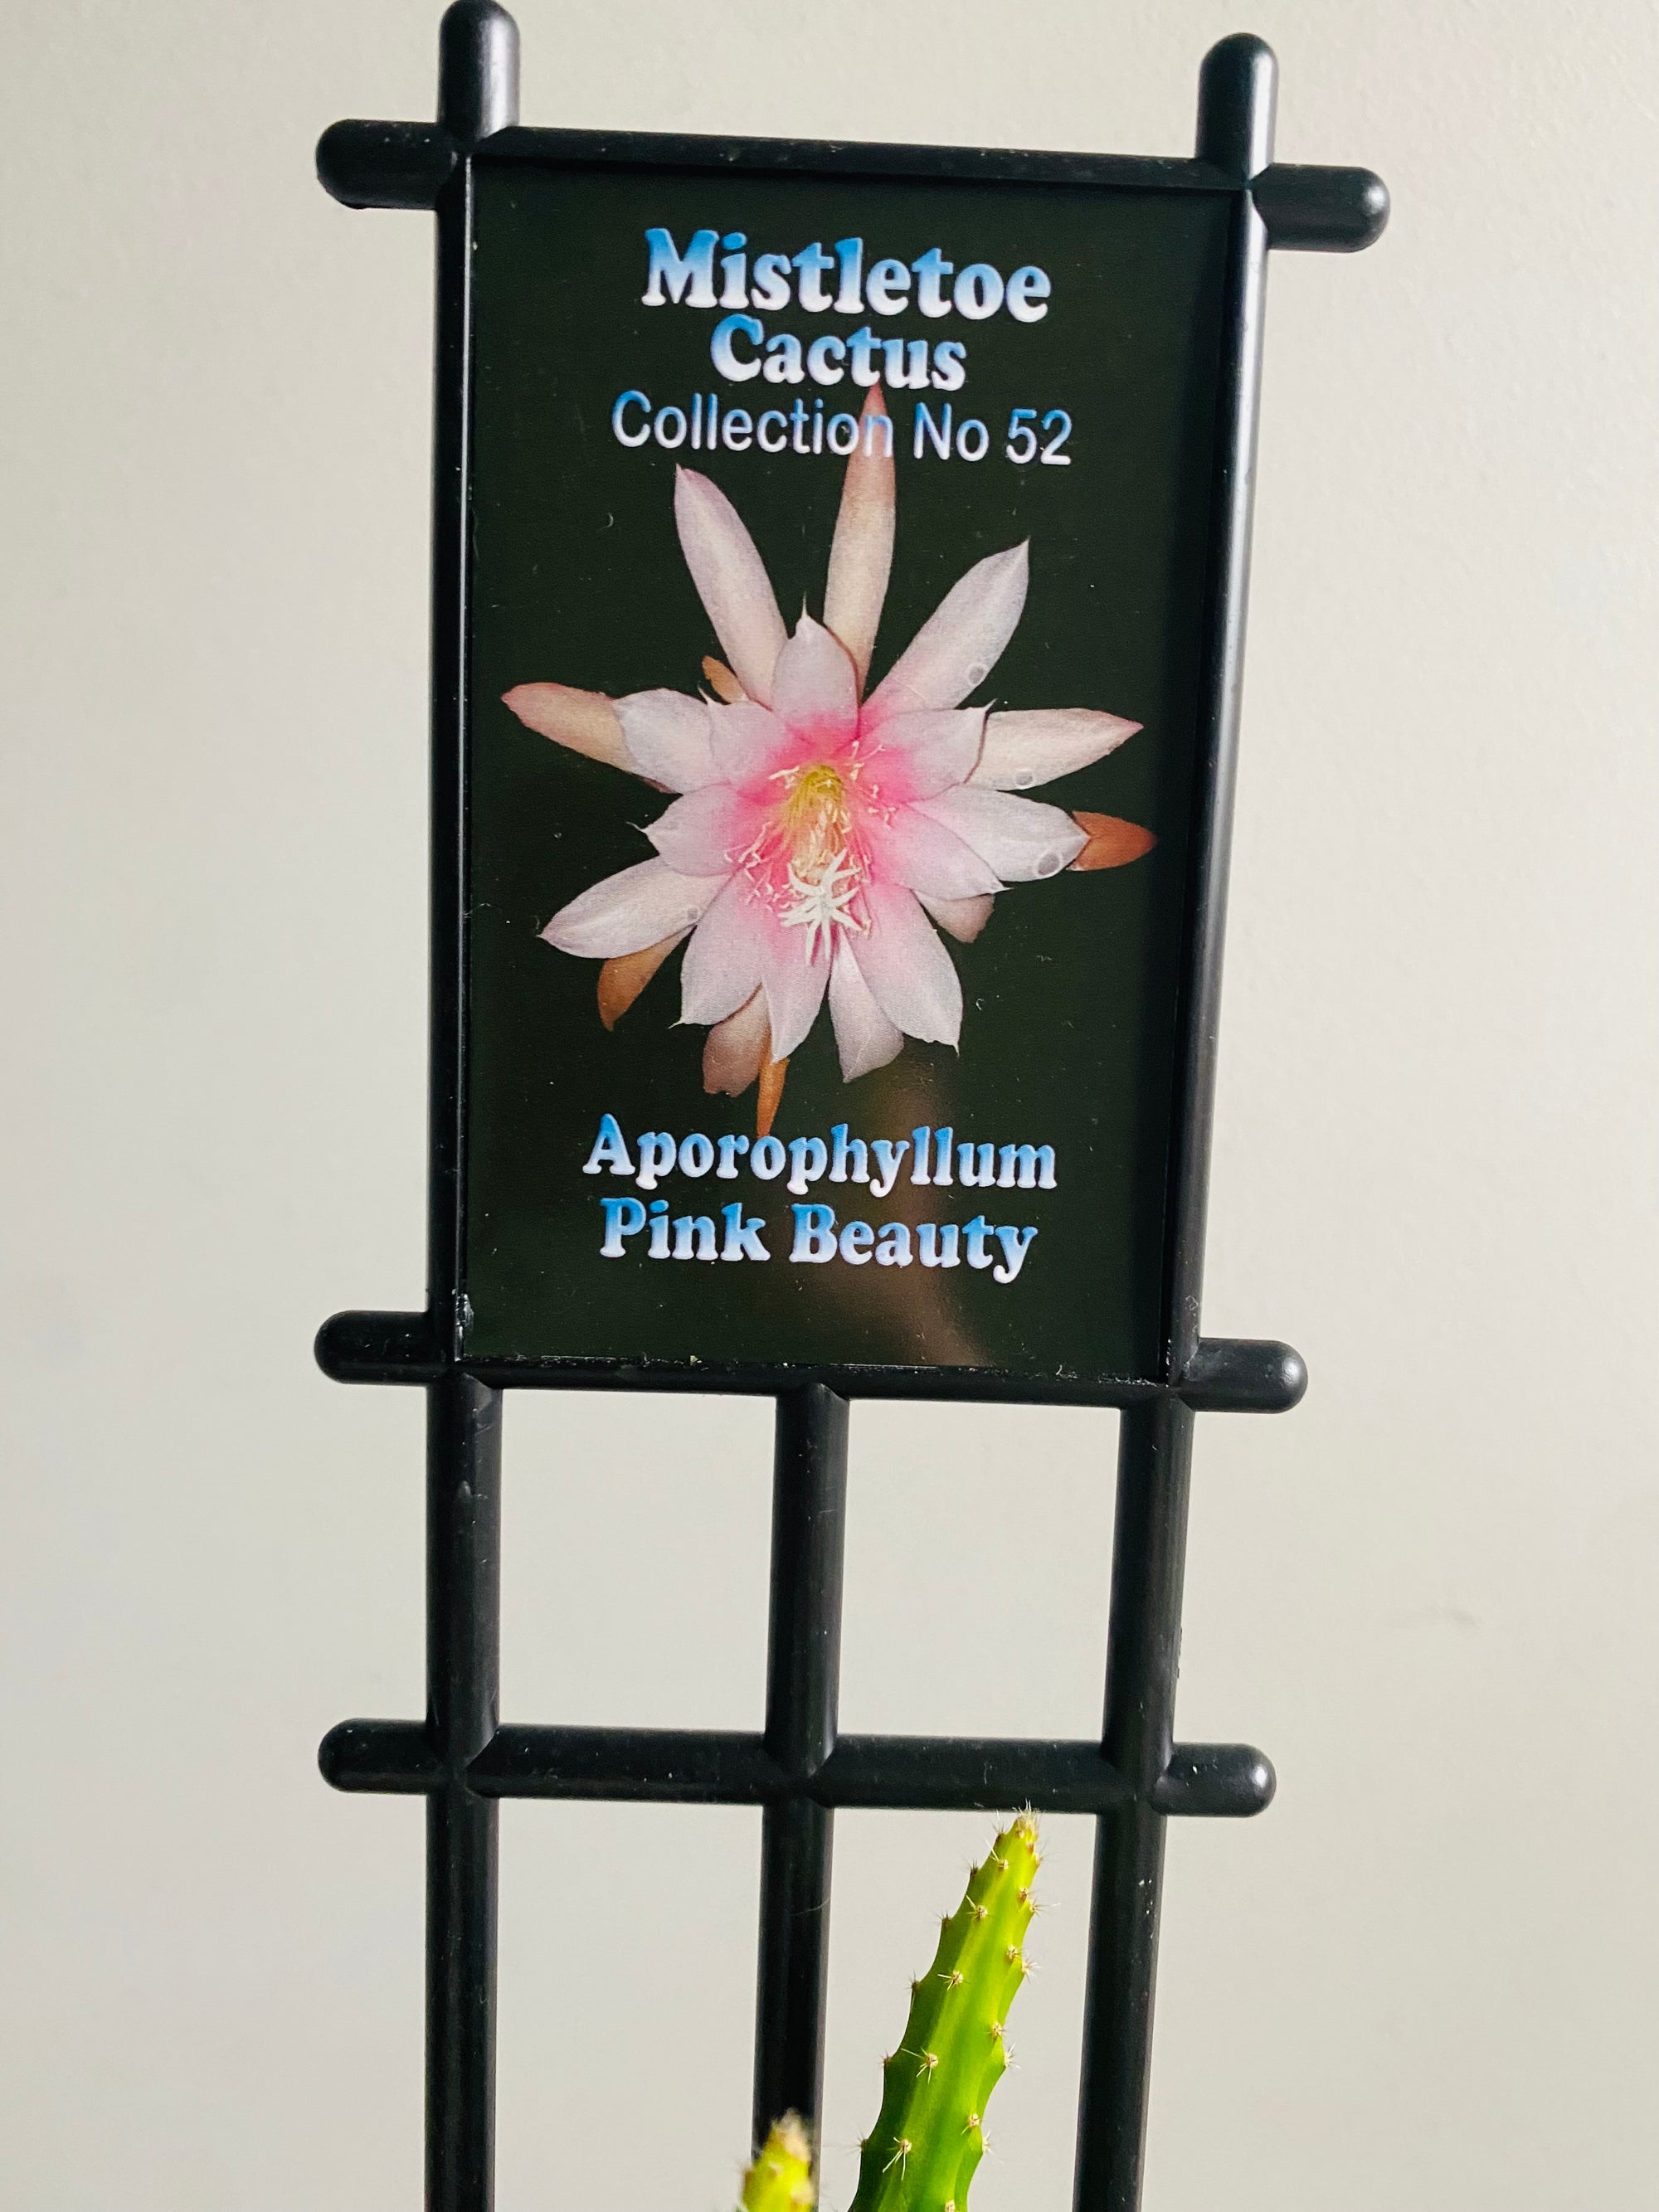 Aporophyllum ‘Pink Beauty’ - Mistletoe Cactus Collection No. 52